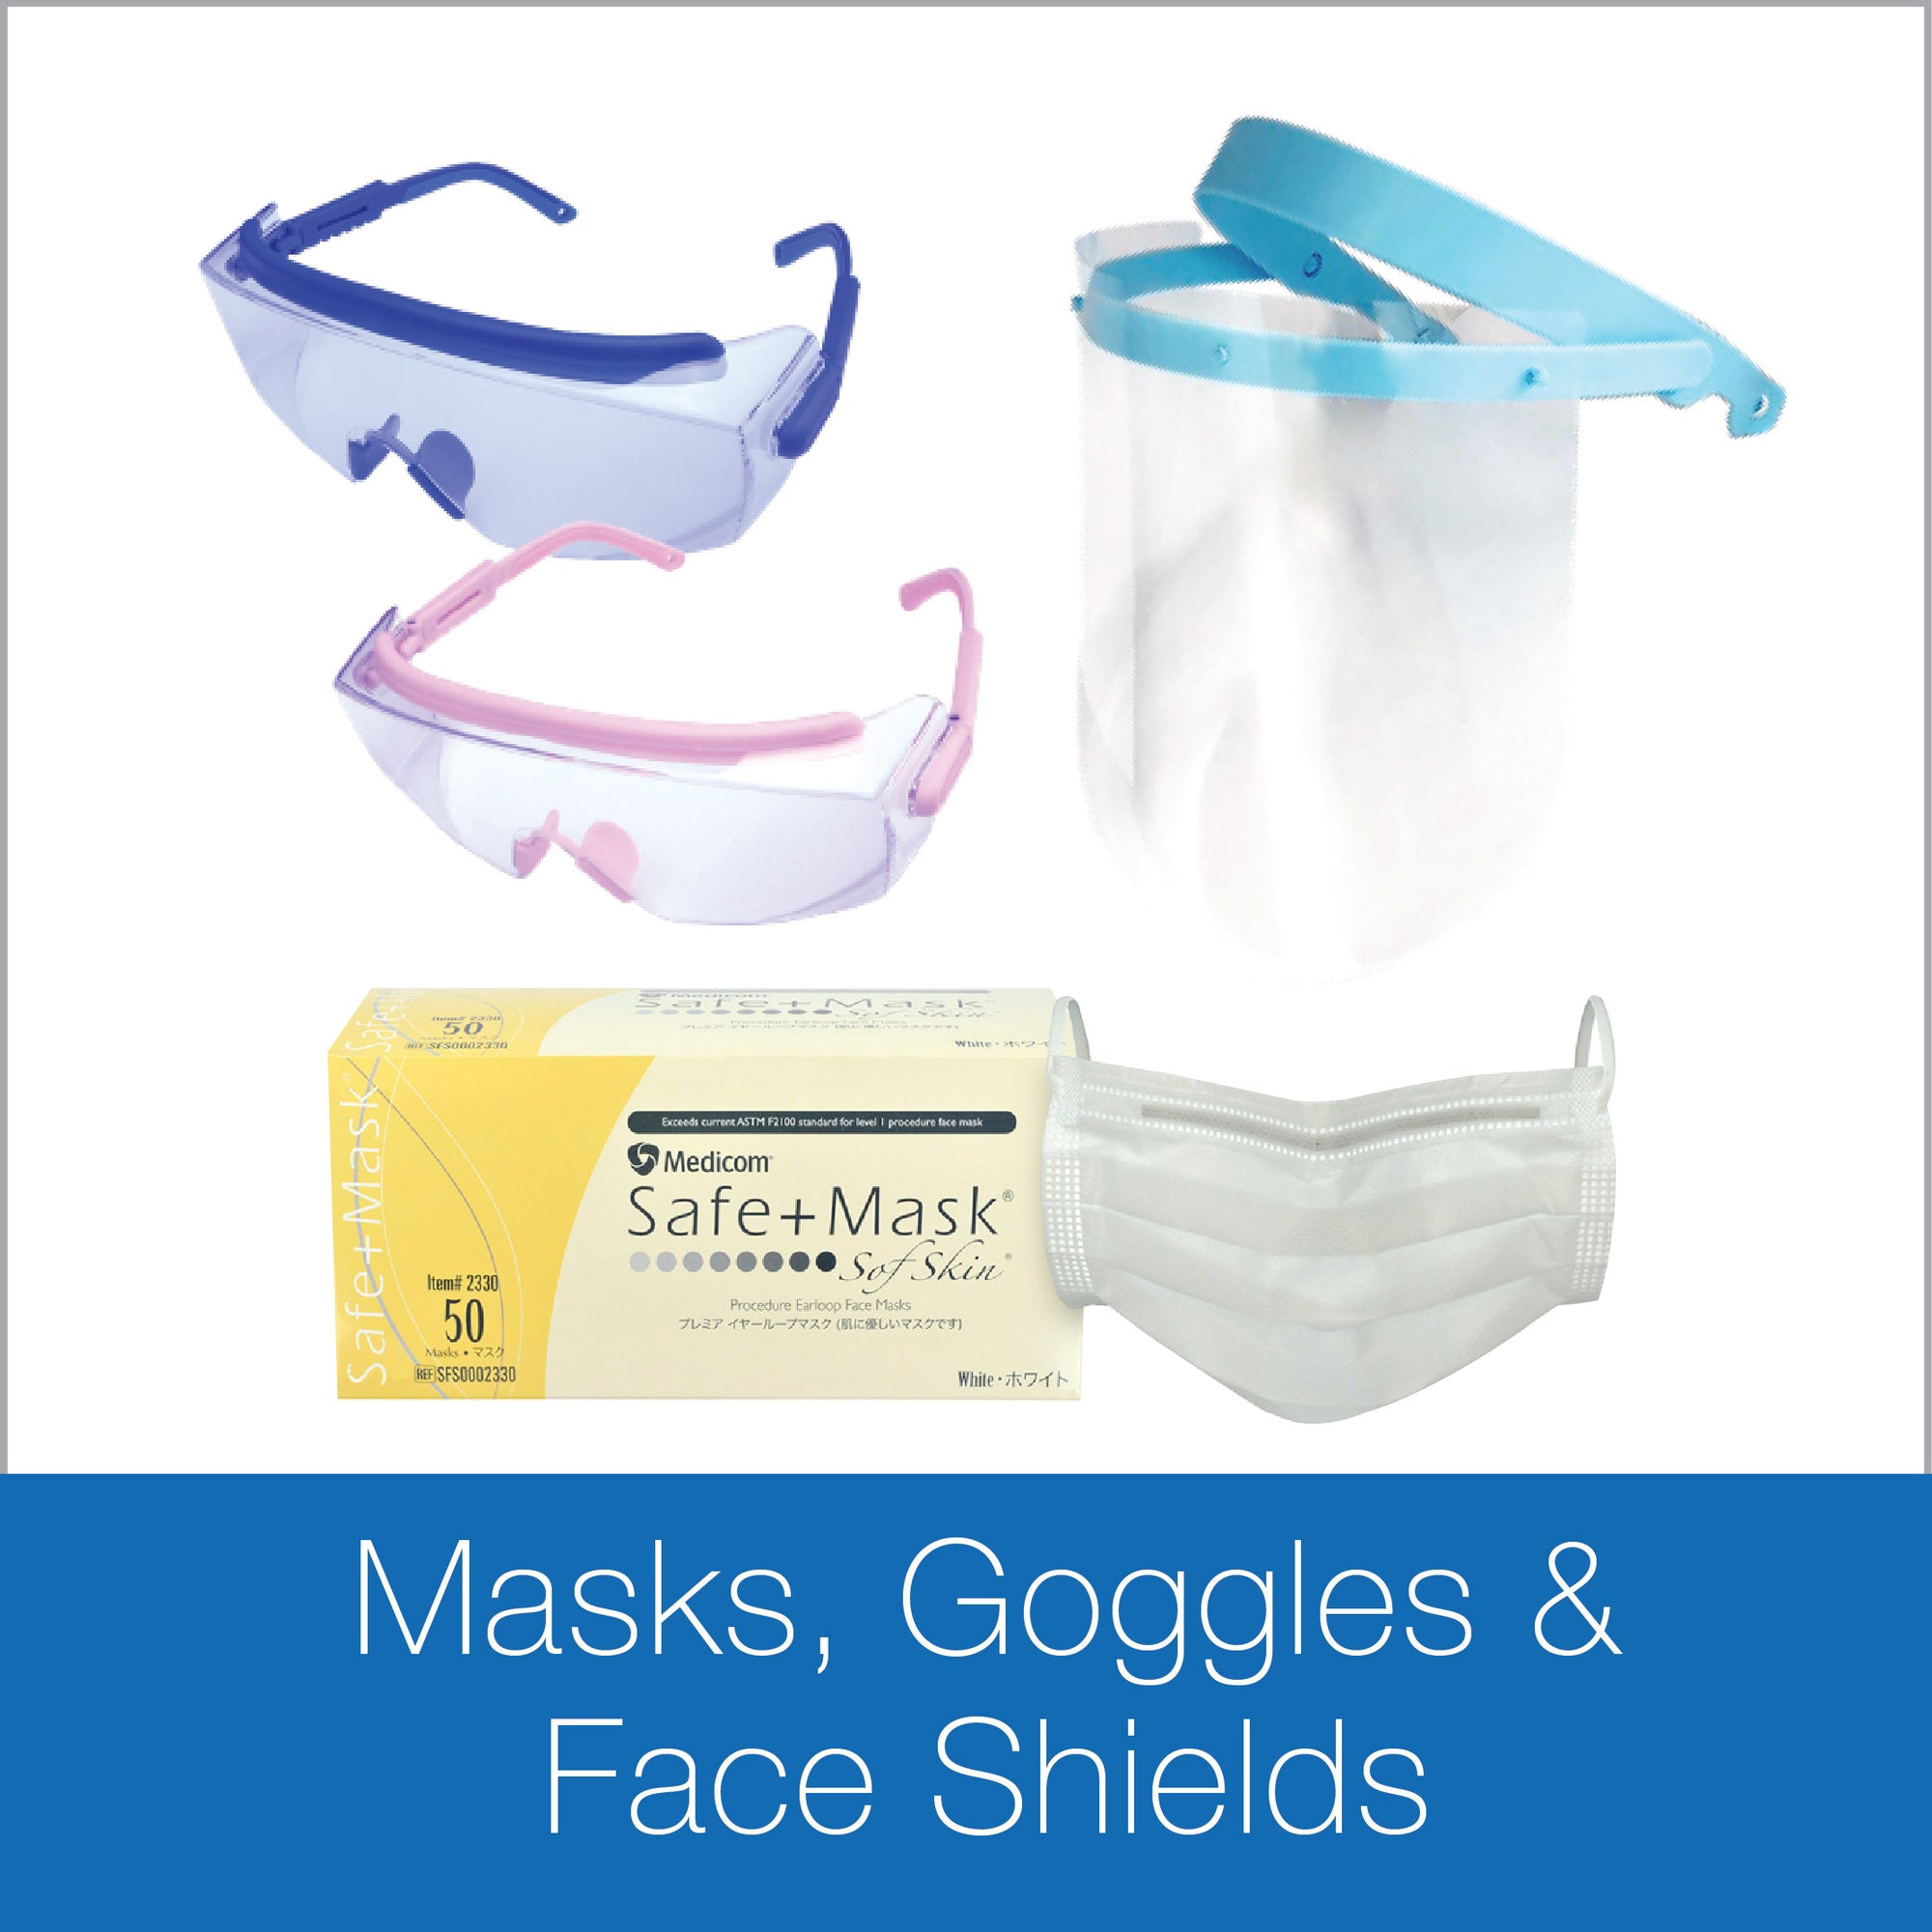 Masks, Googles & Face Shields